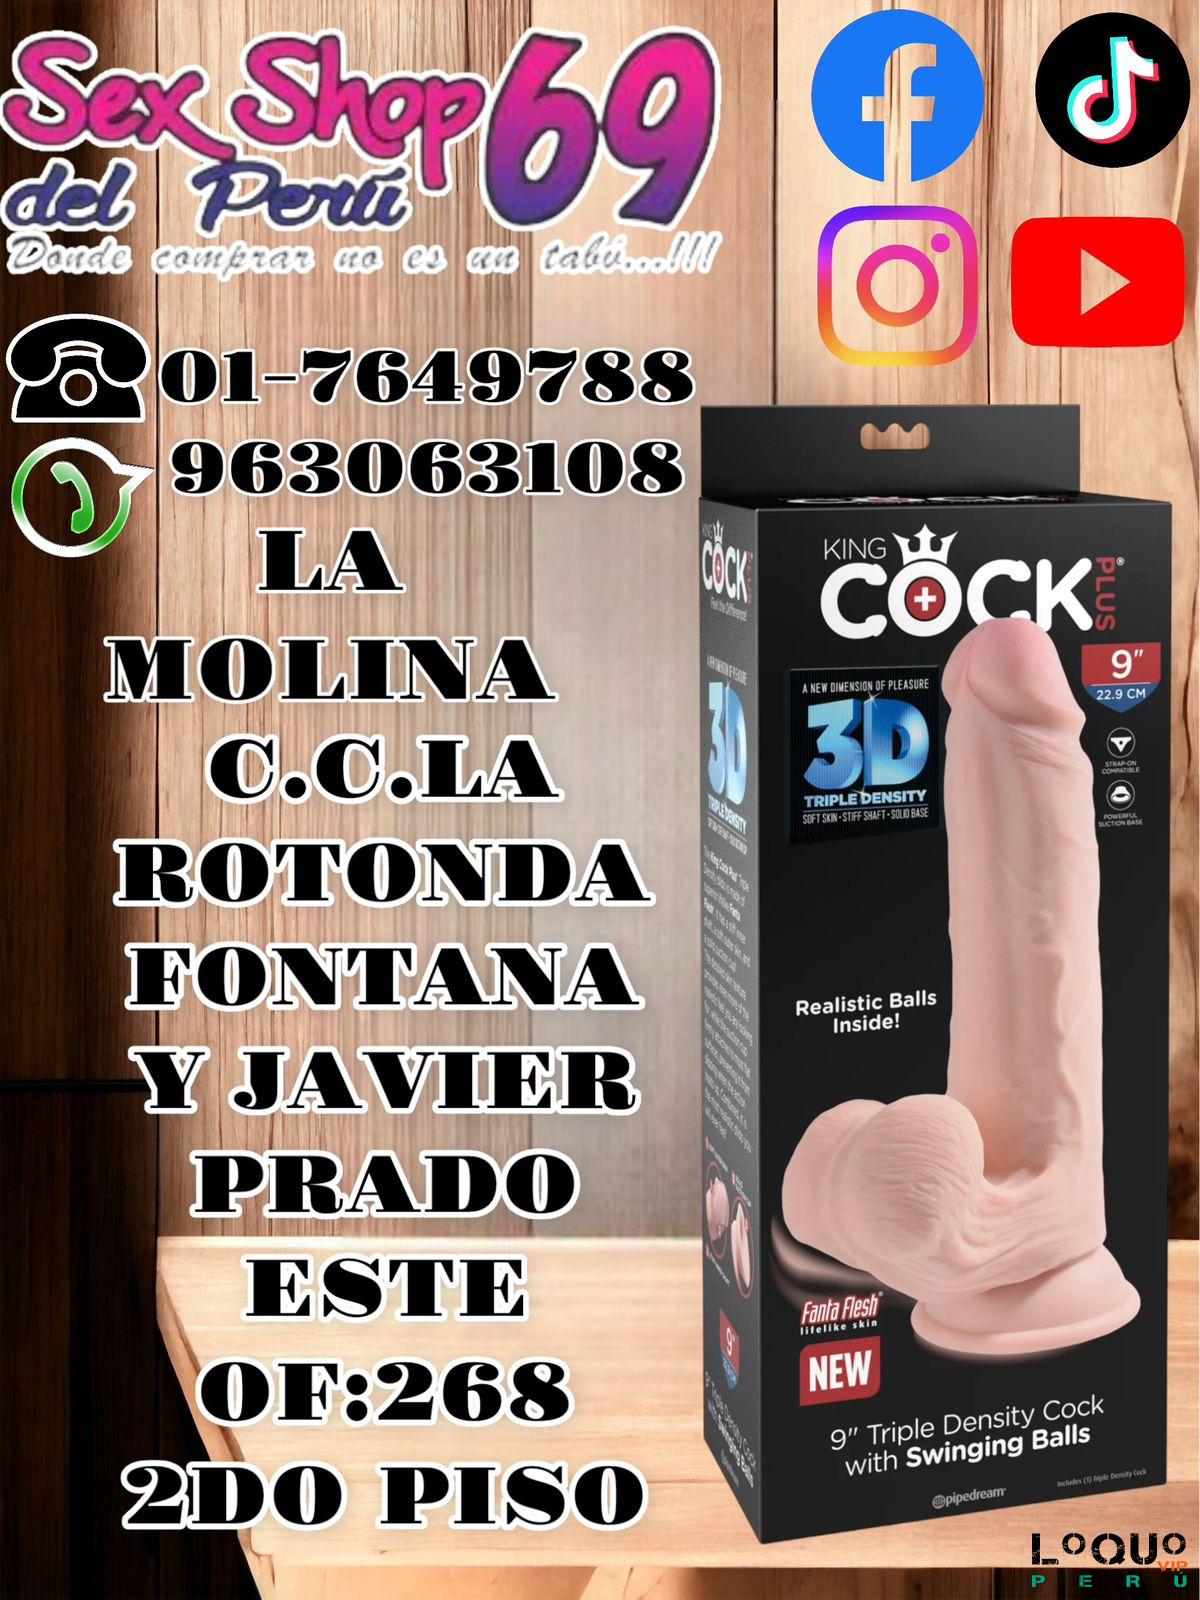 Sex Shop Lima Metropolitana: CONSOLADOR FANTASY DOLDOS SEXSHOP69 LA MOLINA WTSP +51980916589. DLBRY GRTS